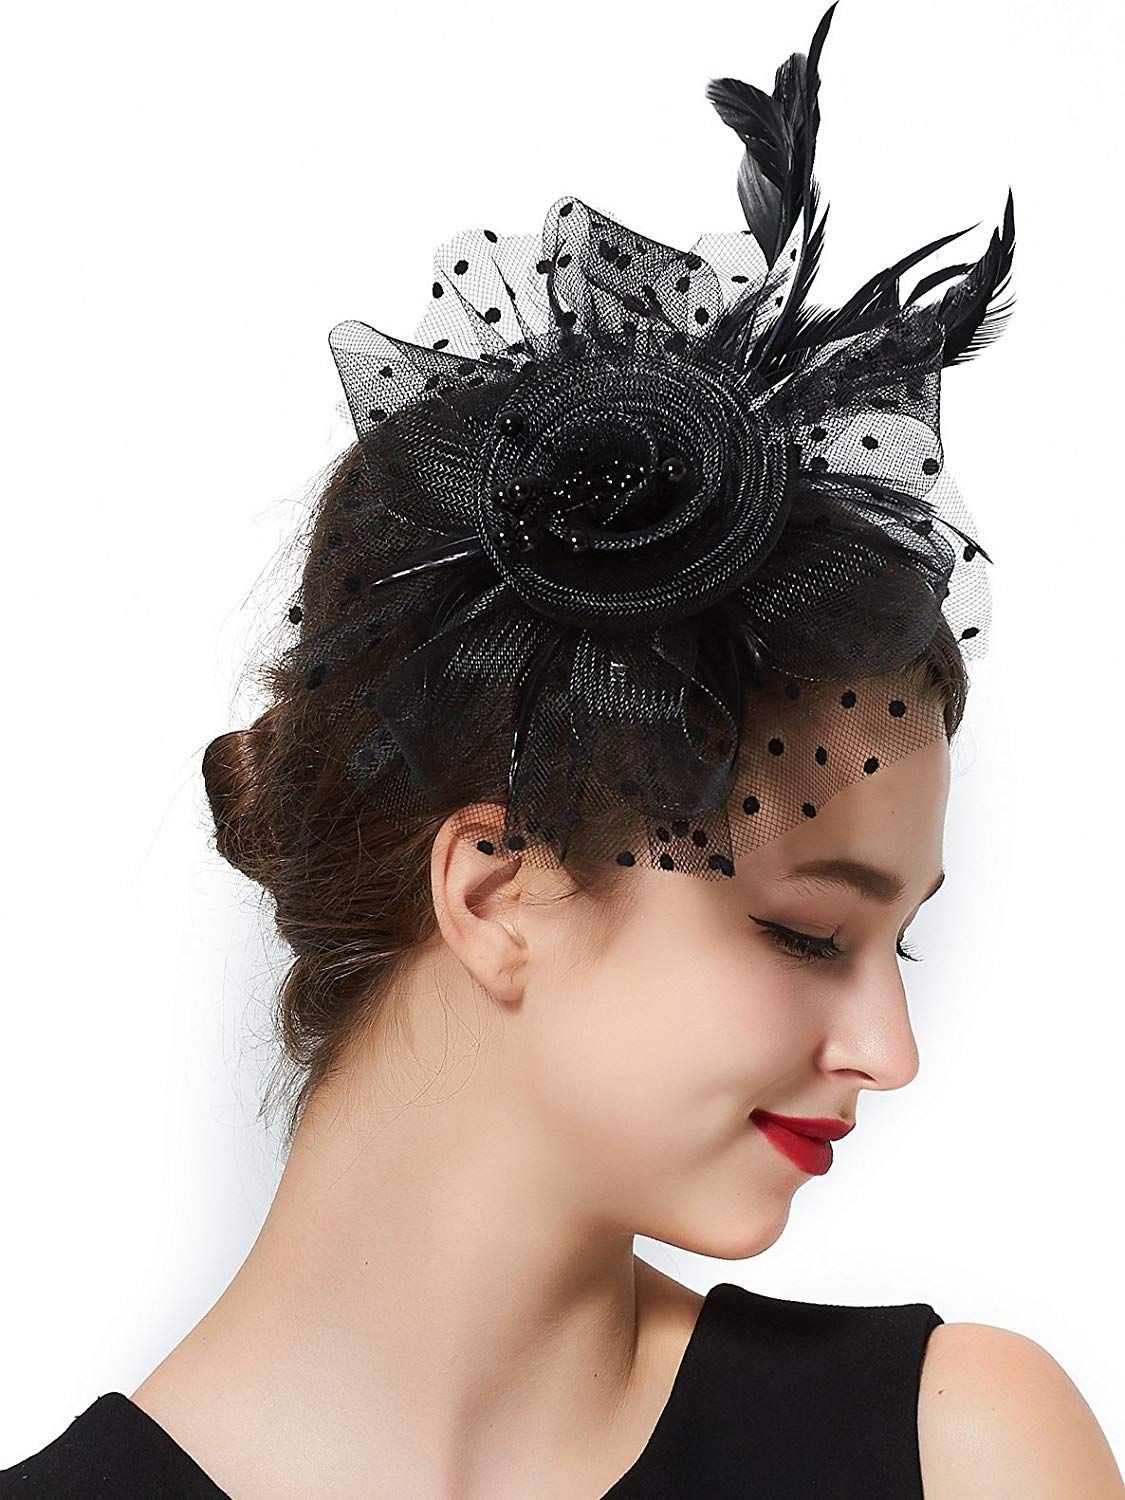 Sedancasesa Headdress Fascinators Wedding Hat Feathers Headband Tea Party Cap